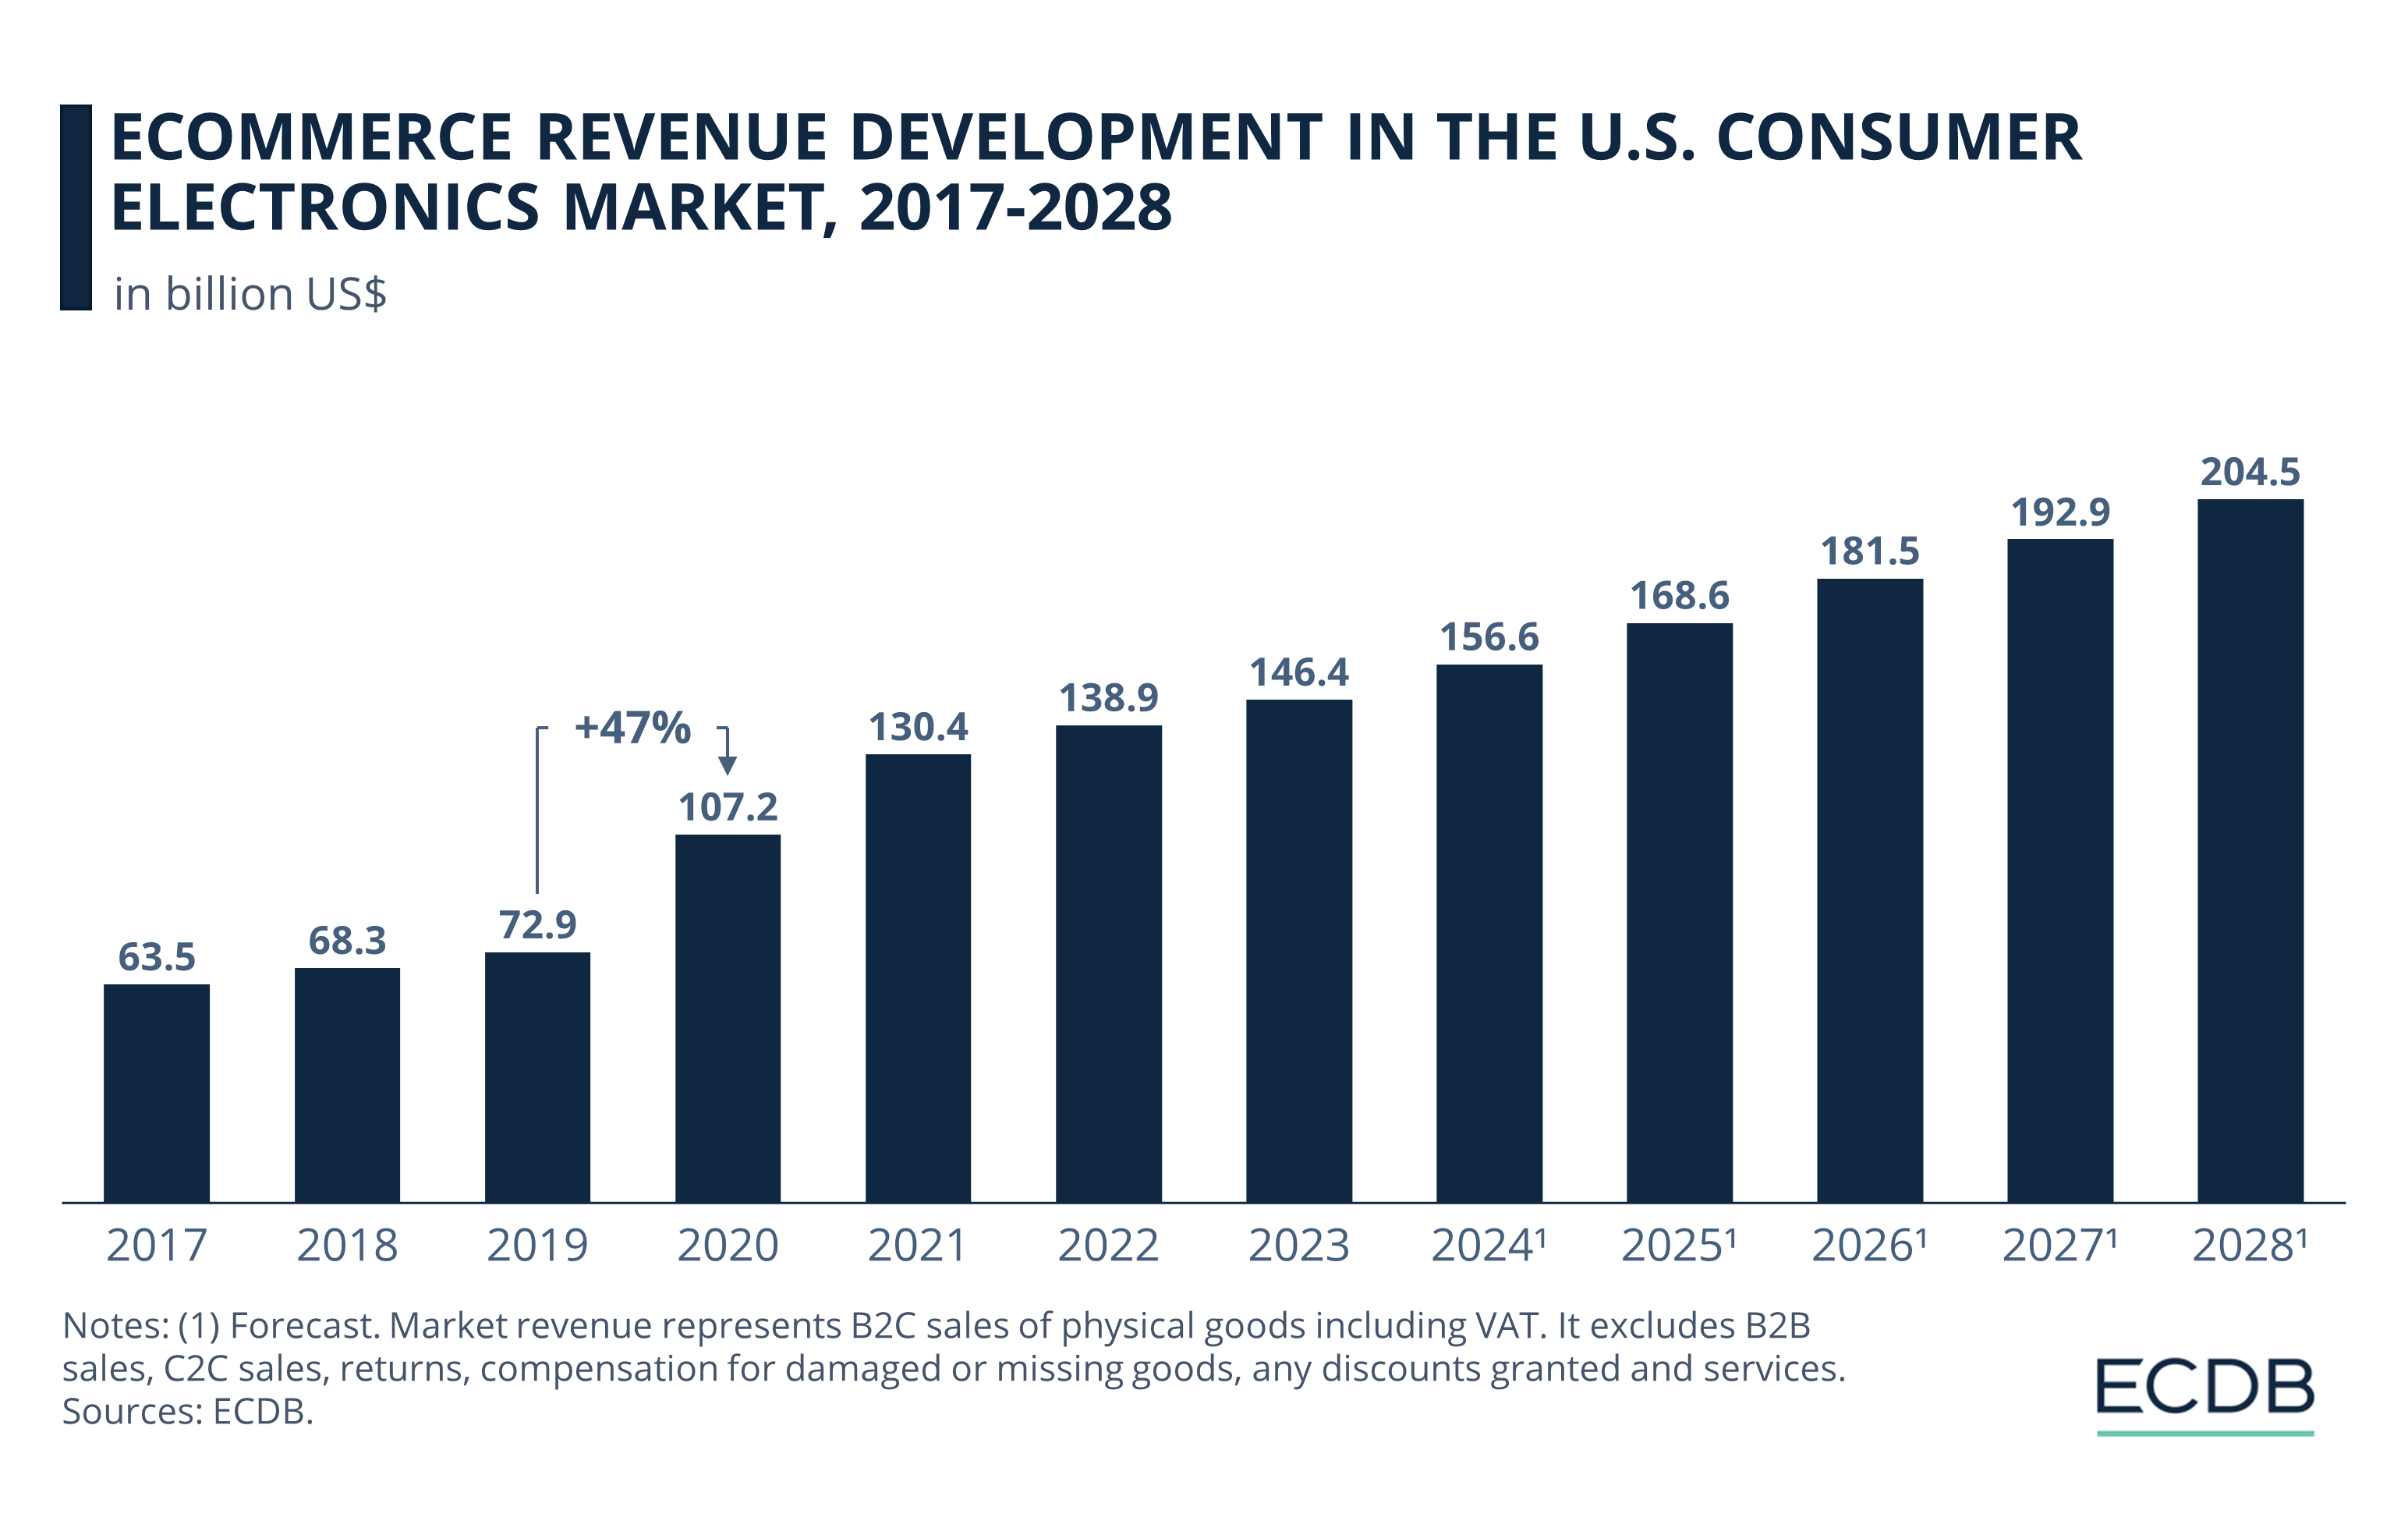 eCommerce Revenue Development in the U.S. Consumer Electronics Market, 2017-2028